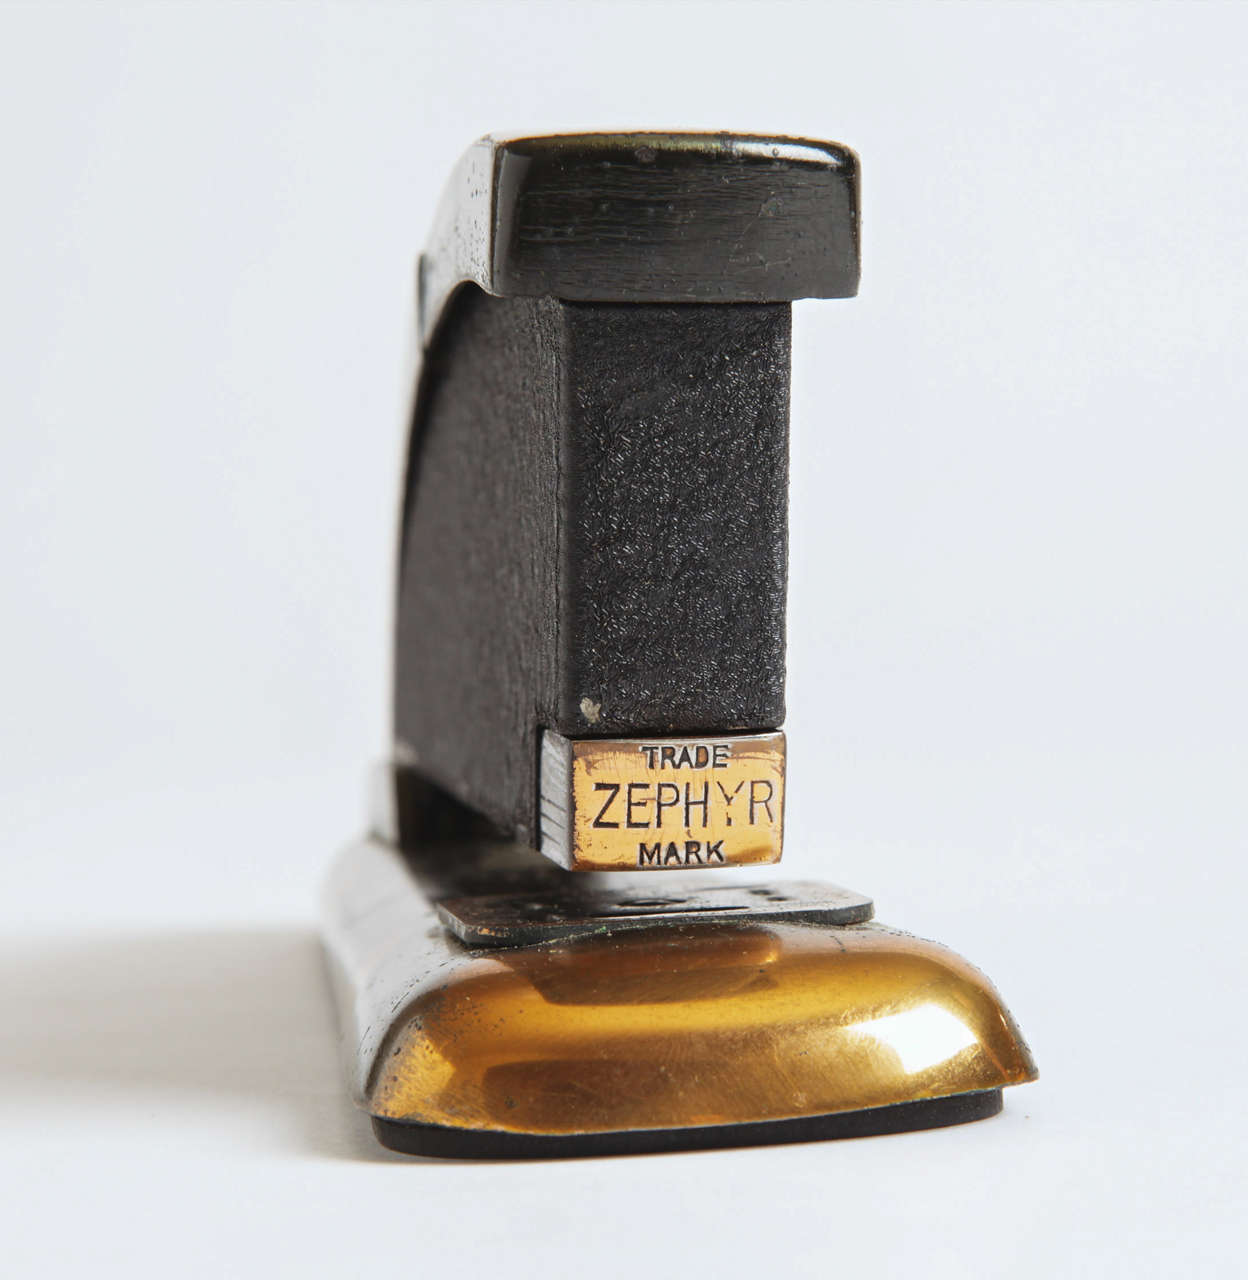 Rare Zephyr Hotchkiss Stapler by Robert Heller with Original Box and Insert For Sale 1